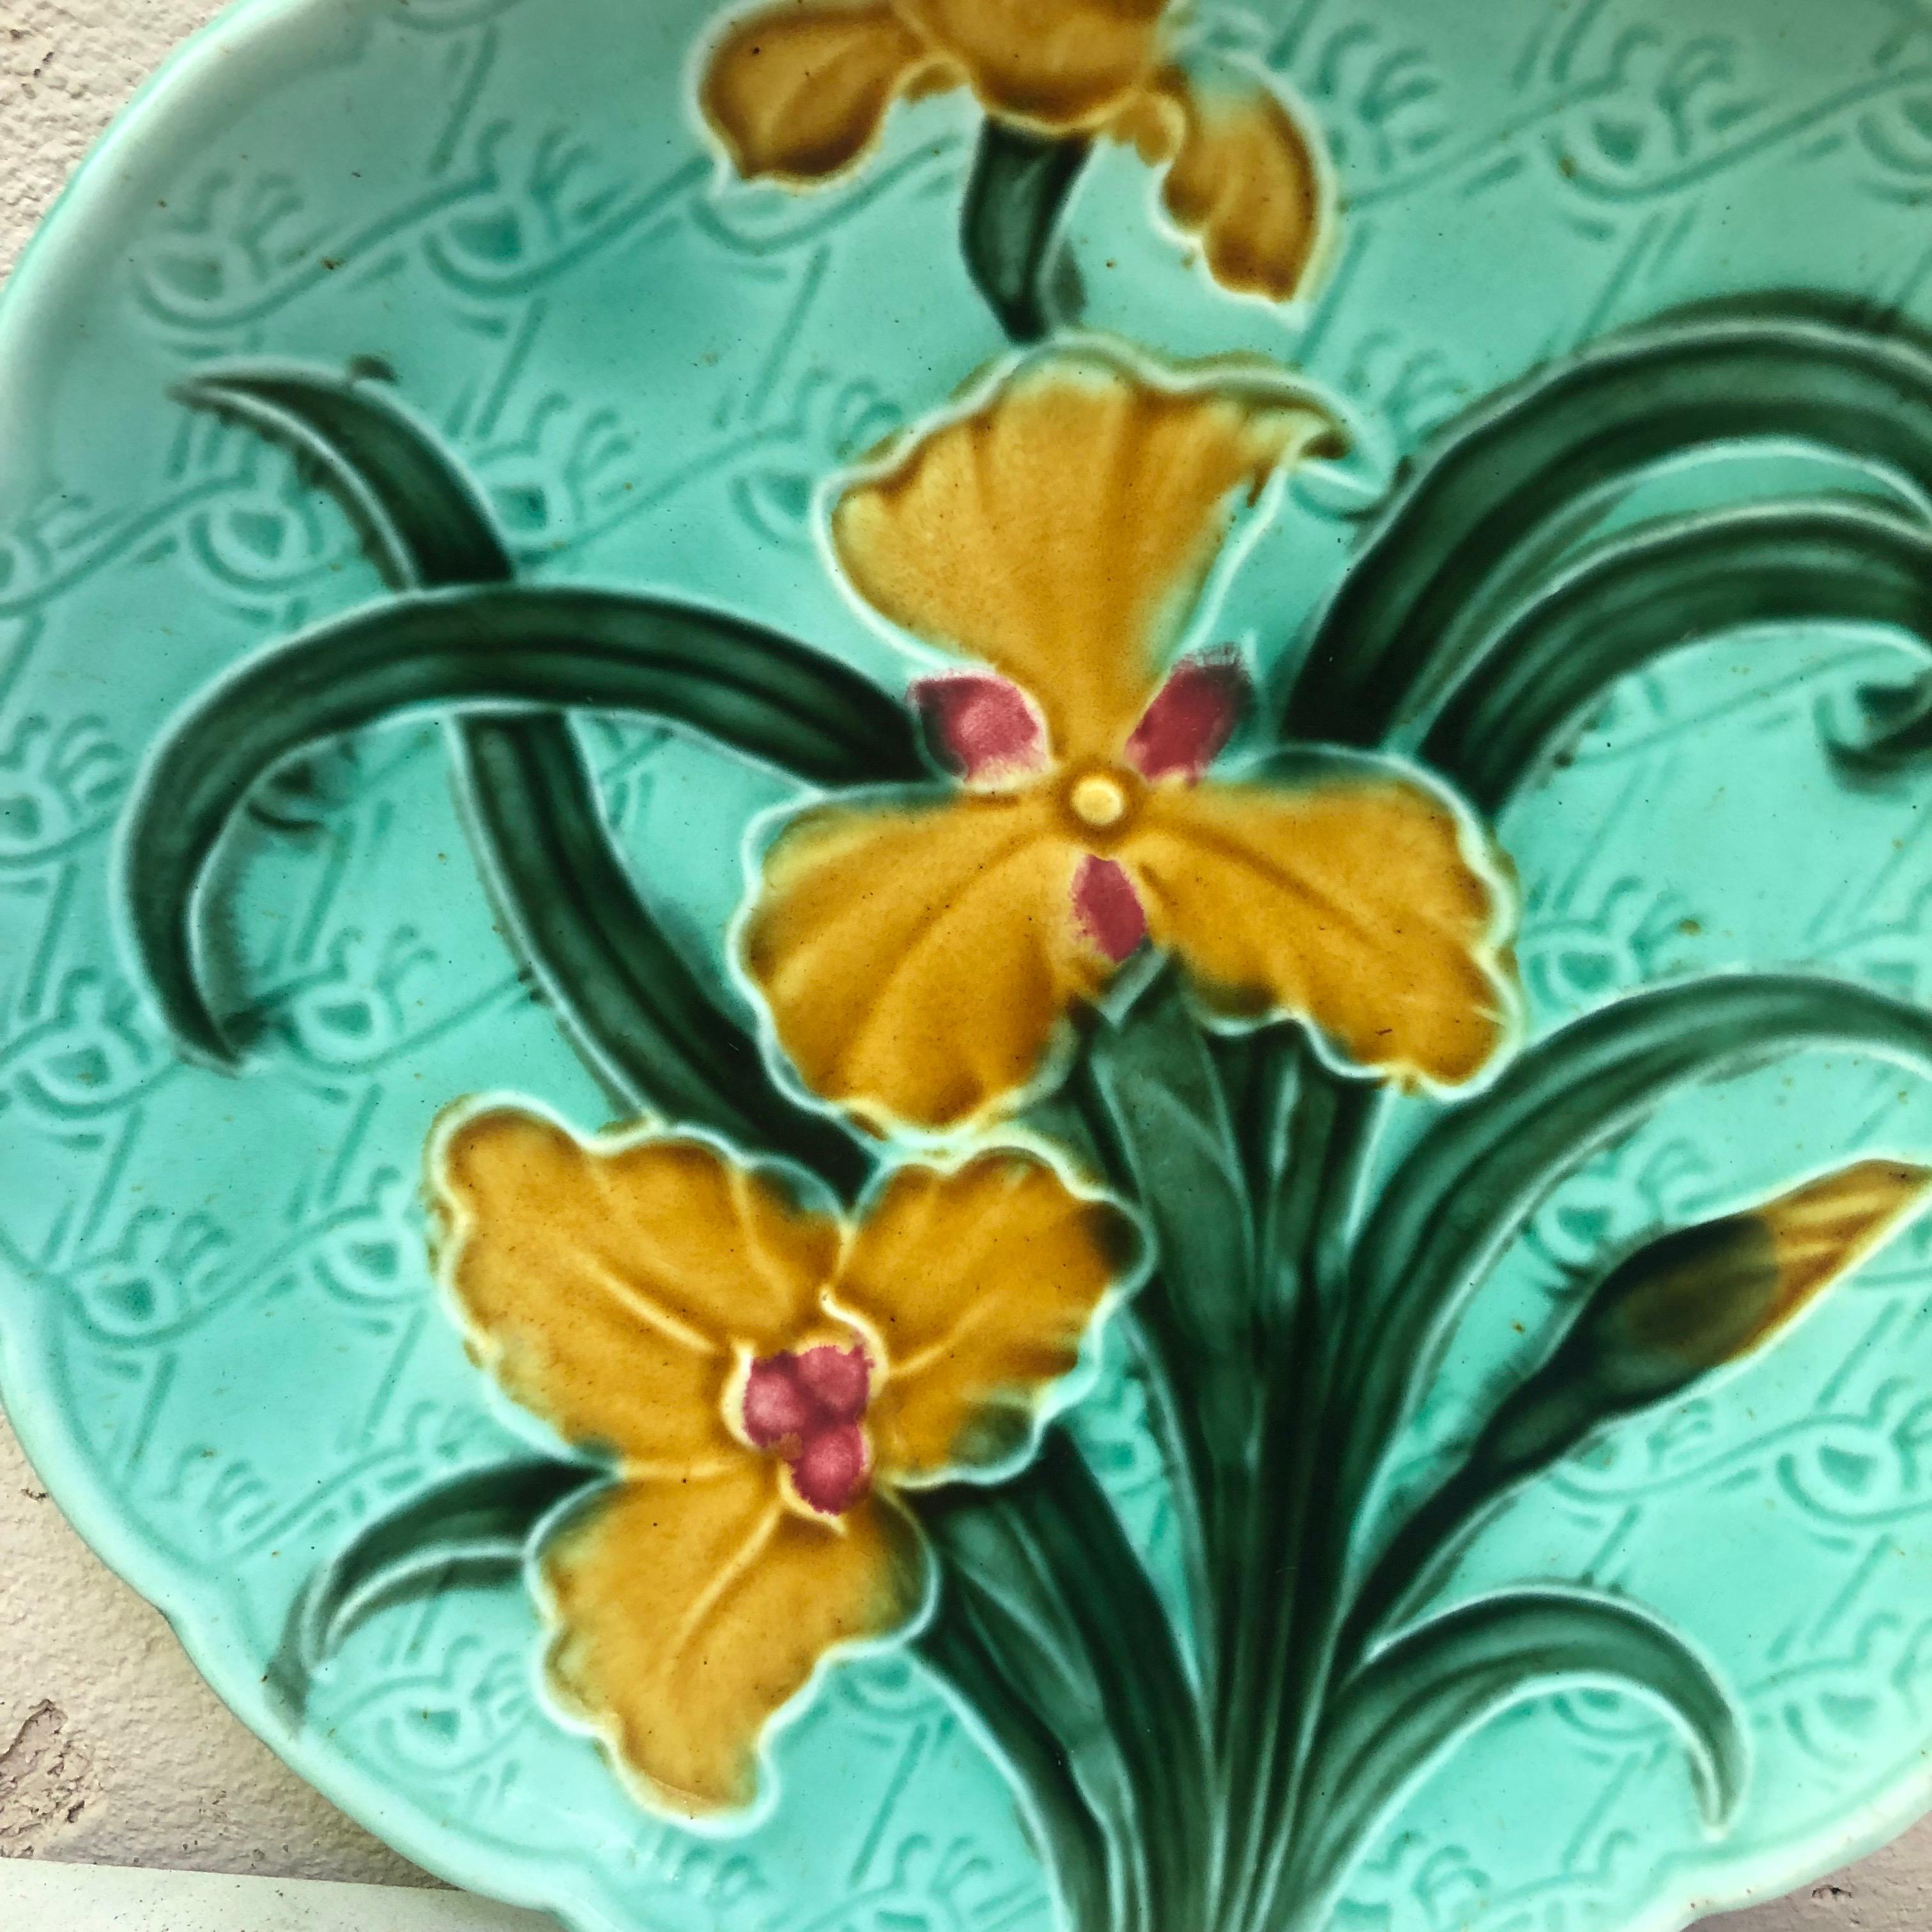 French Majolica yellow Iris plate signed St F G, circa 1900.
Aqua background.